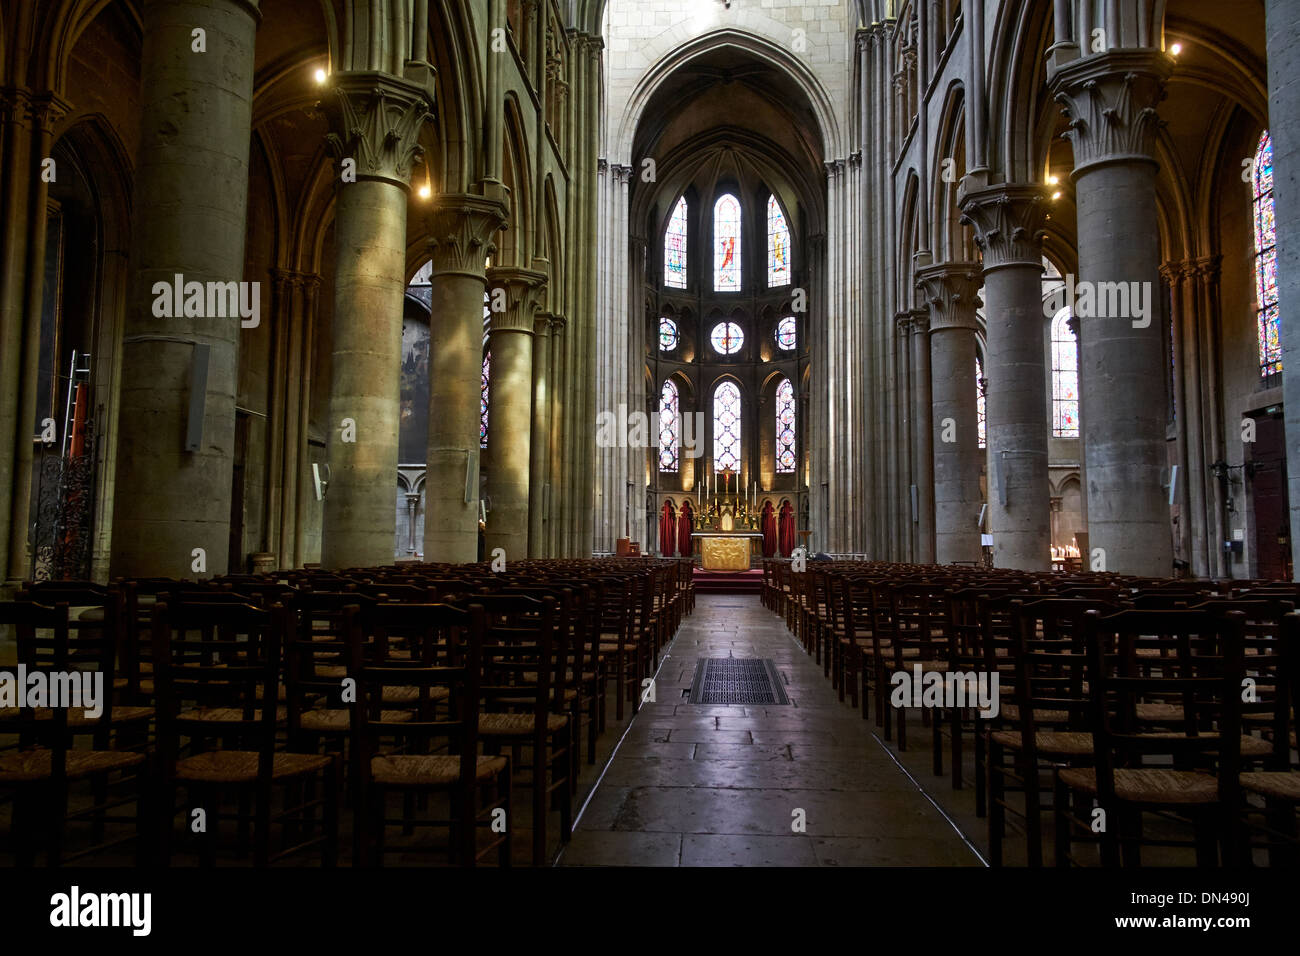 Gotische kathedraal van Dijon, Frankrijk - Roman Catholic Cathedral in Dijon, France - Cathedrale Saint-Benigne de Dijon Stock Photo